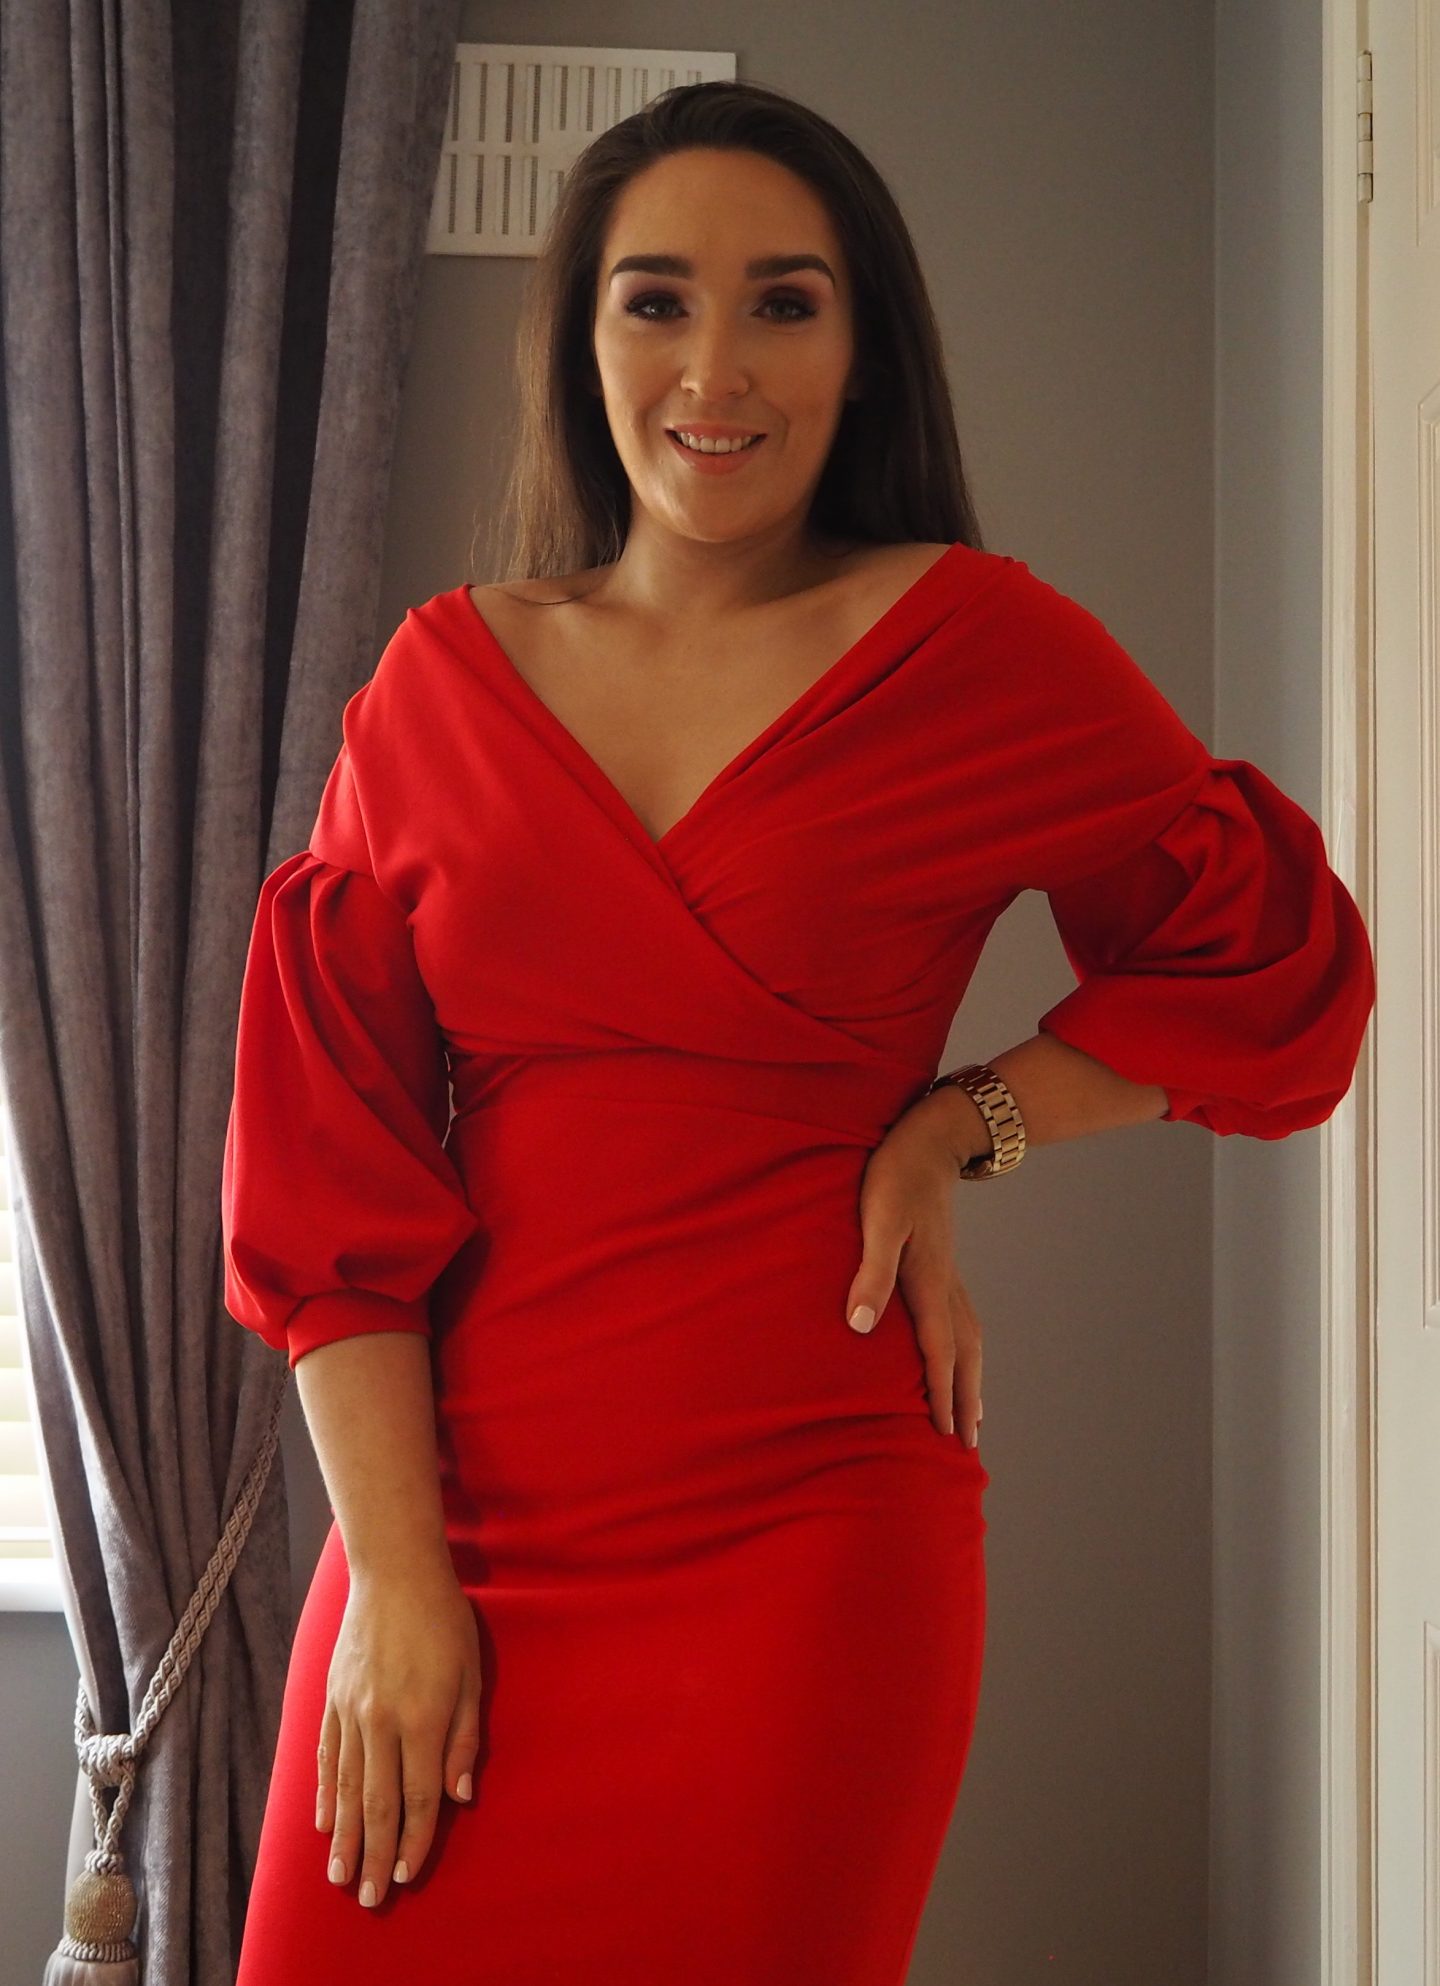 Femme Luxe Red Dress https://femmeluxefinery.co.uk